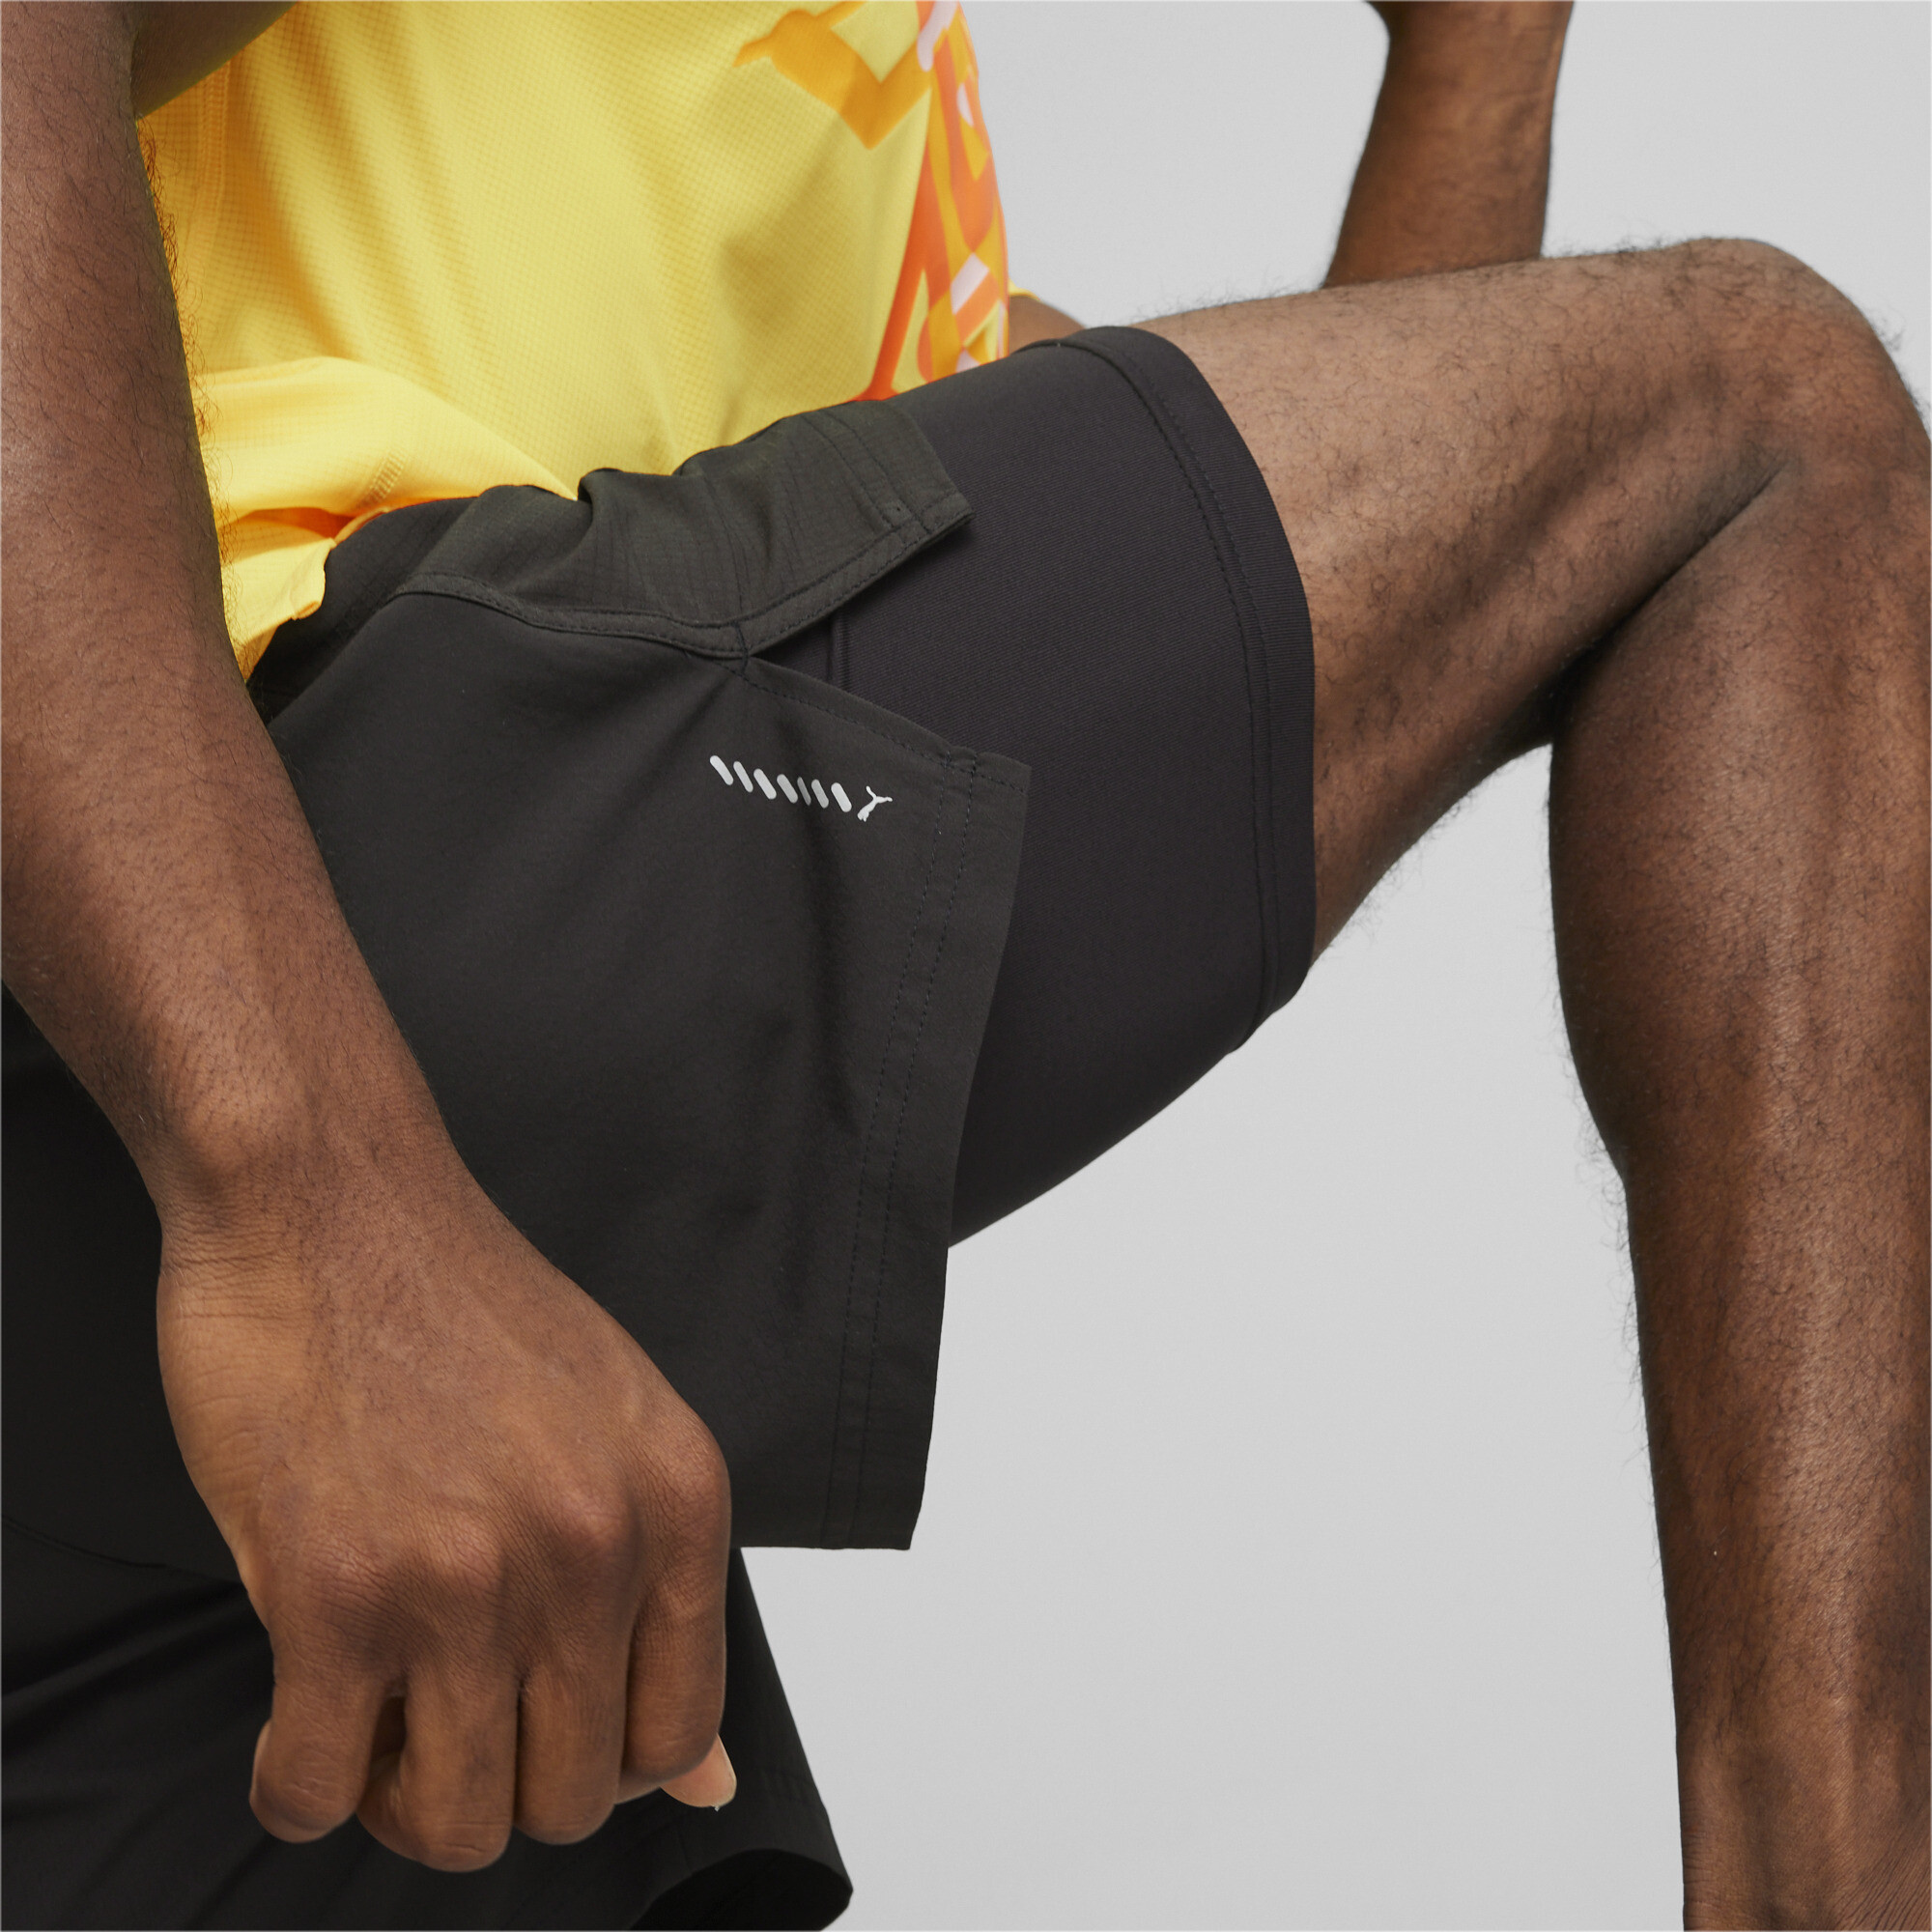 Men's PUMA Run Velocity ULTRAWEAVE 2-in-1 Running Shorts. In Black, Size 2XL